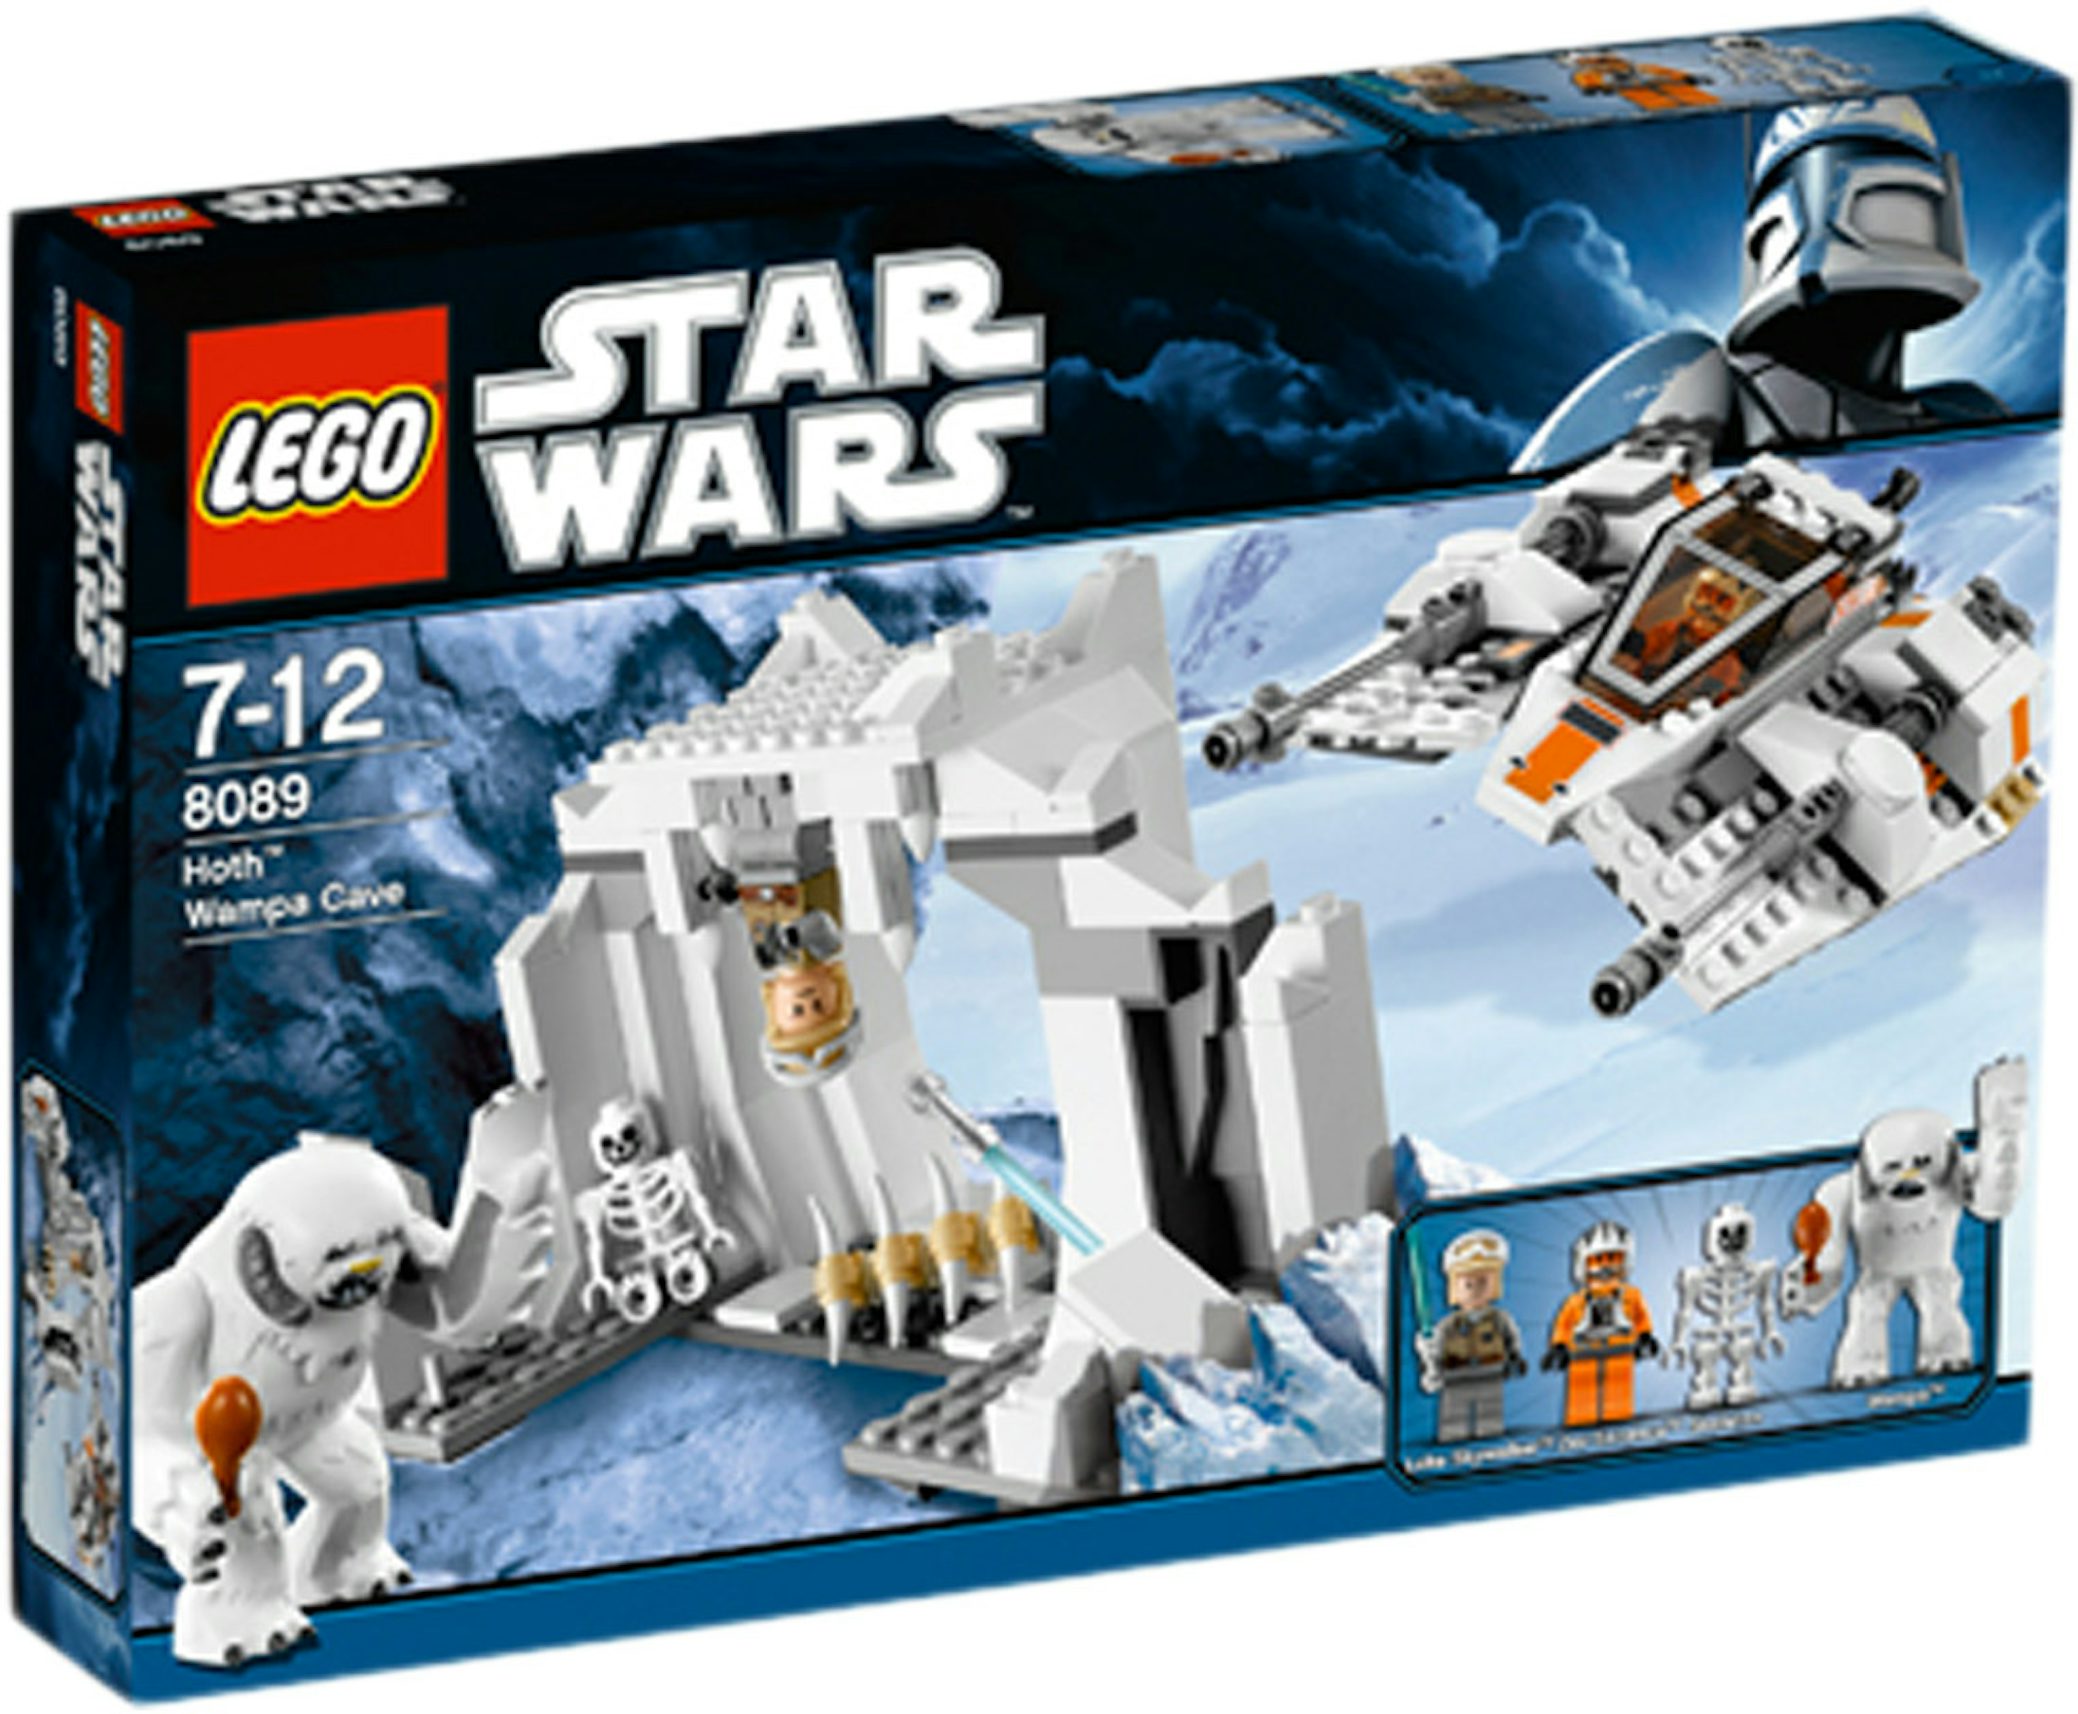 LEGO Star Wars Hoth Wampa Cave Set 8089 - US